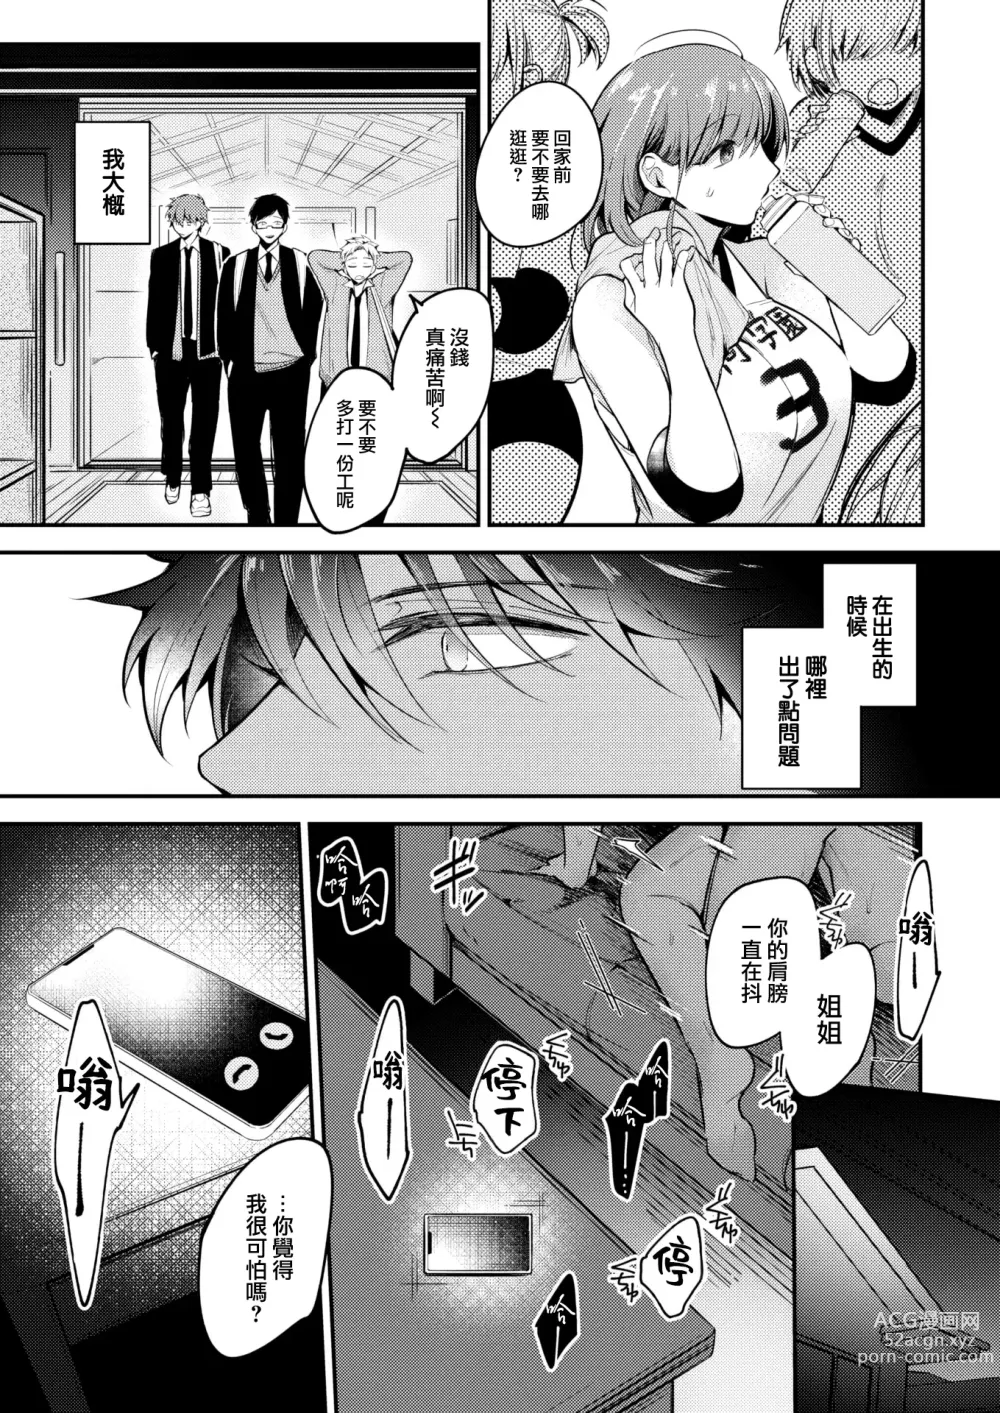 Page 4 of manga Tairo naki Netsu